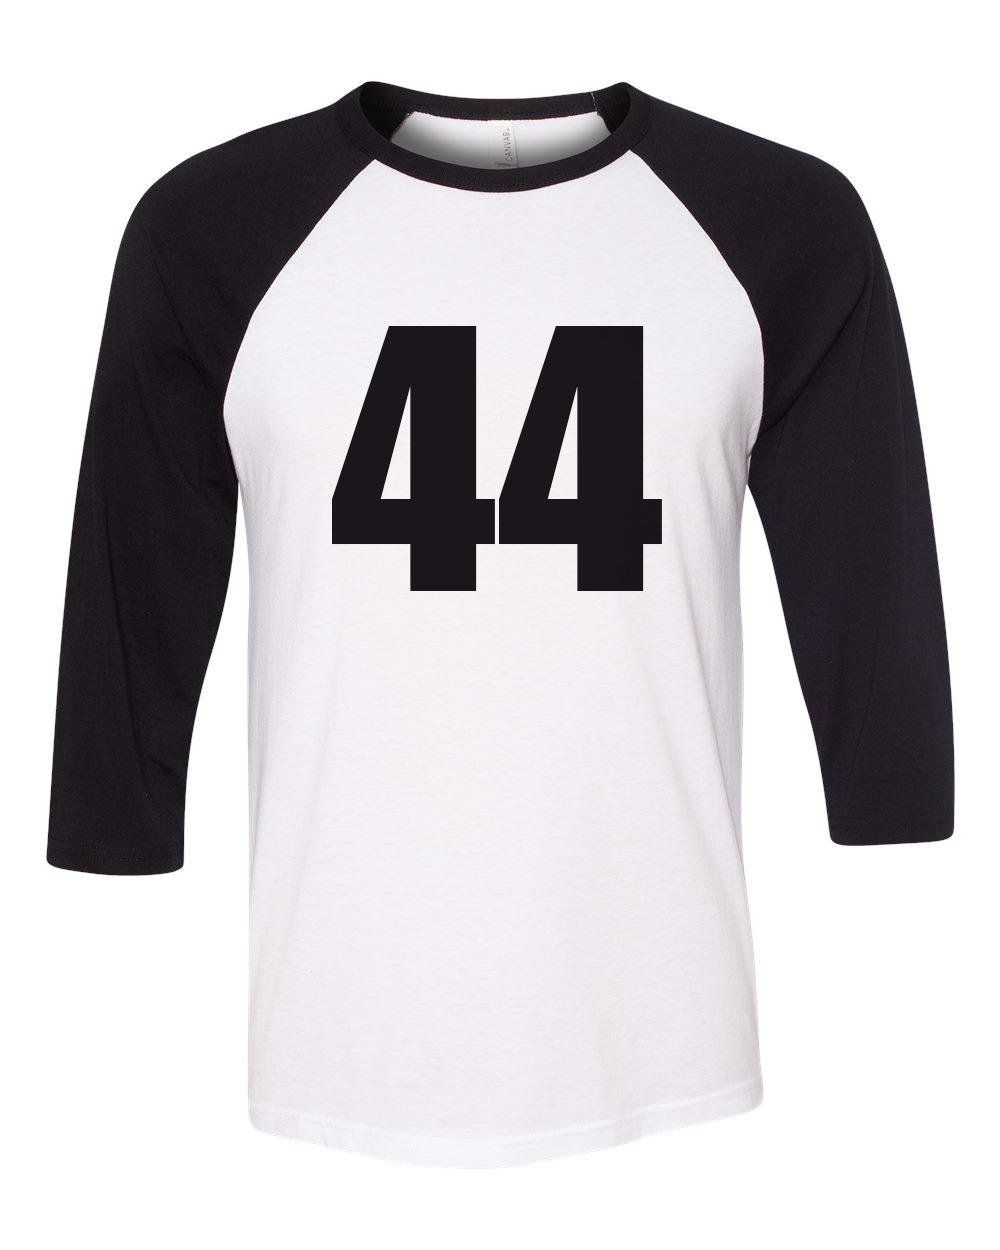 Mandy 44 Baseball Shirt